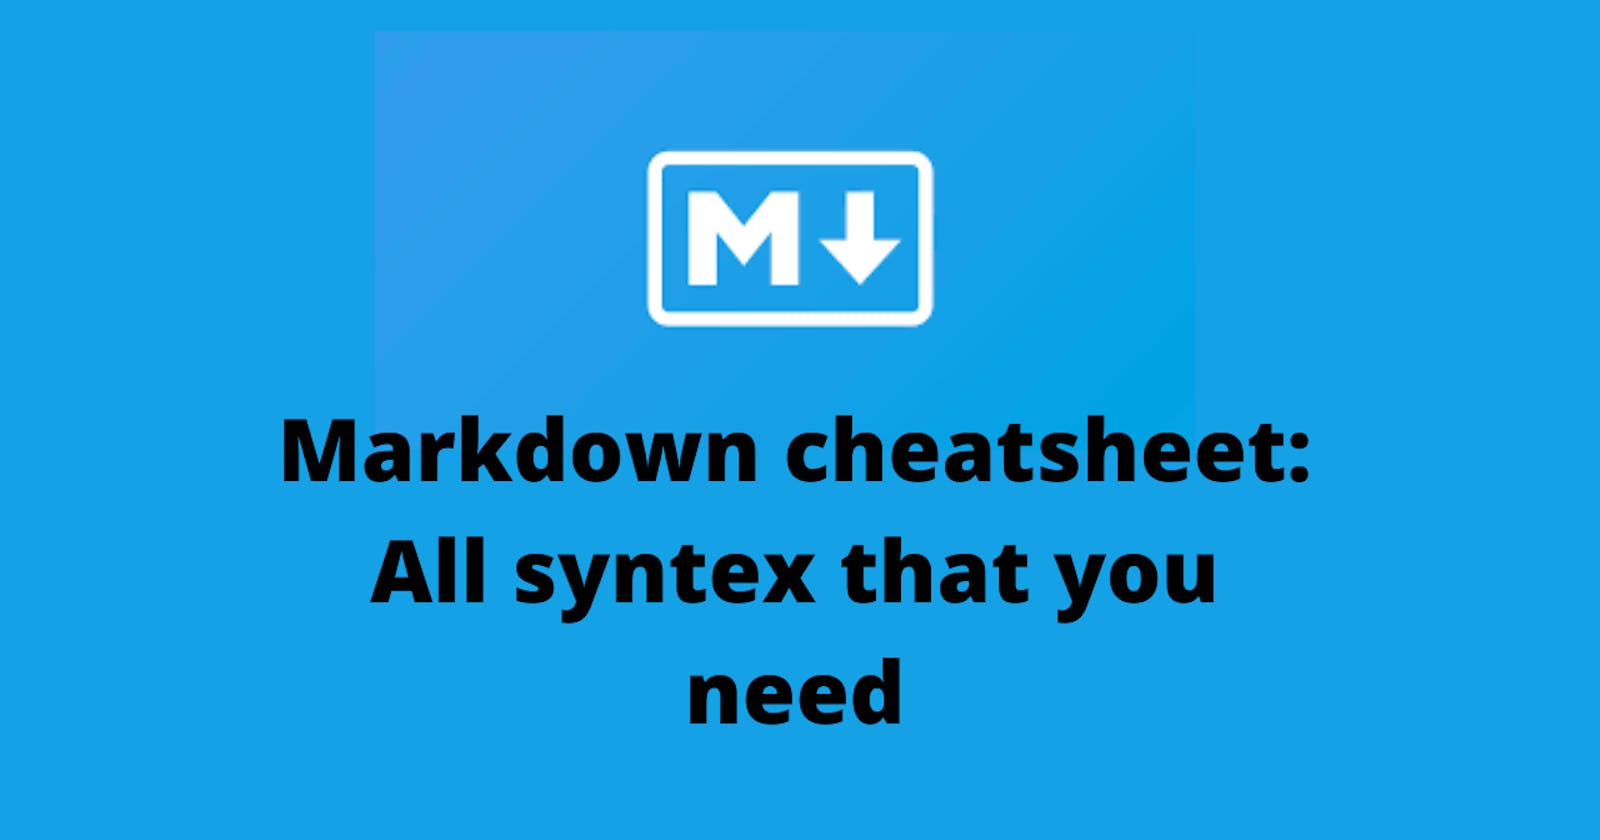 Markdown cheatsheet: Brief detail with syntex